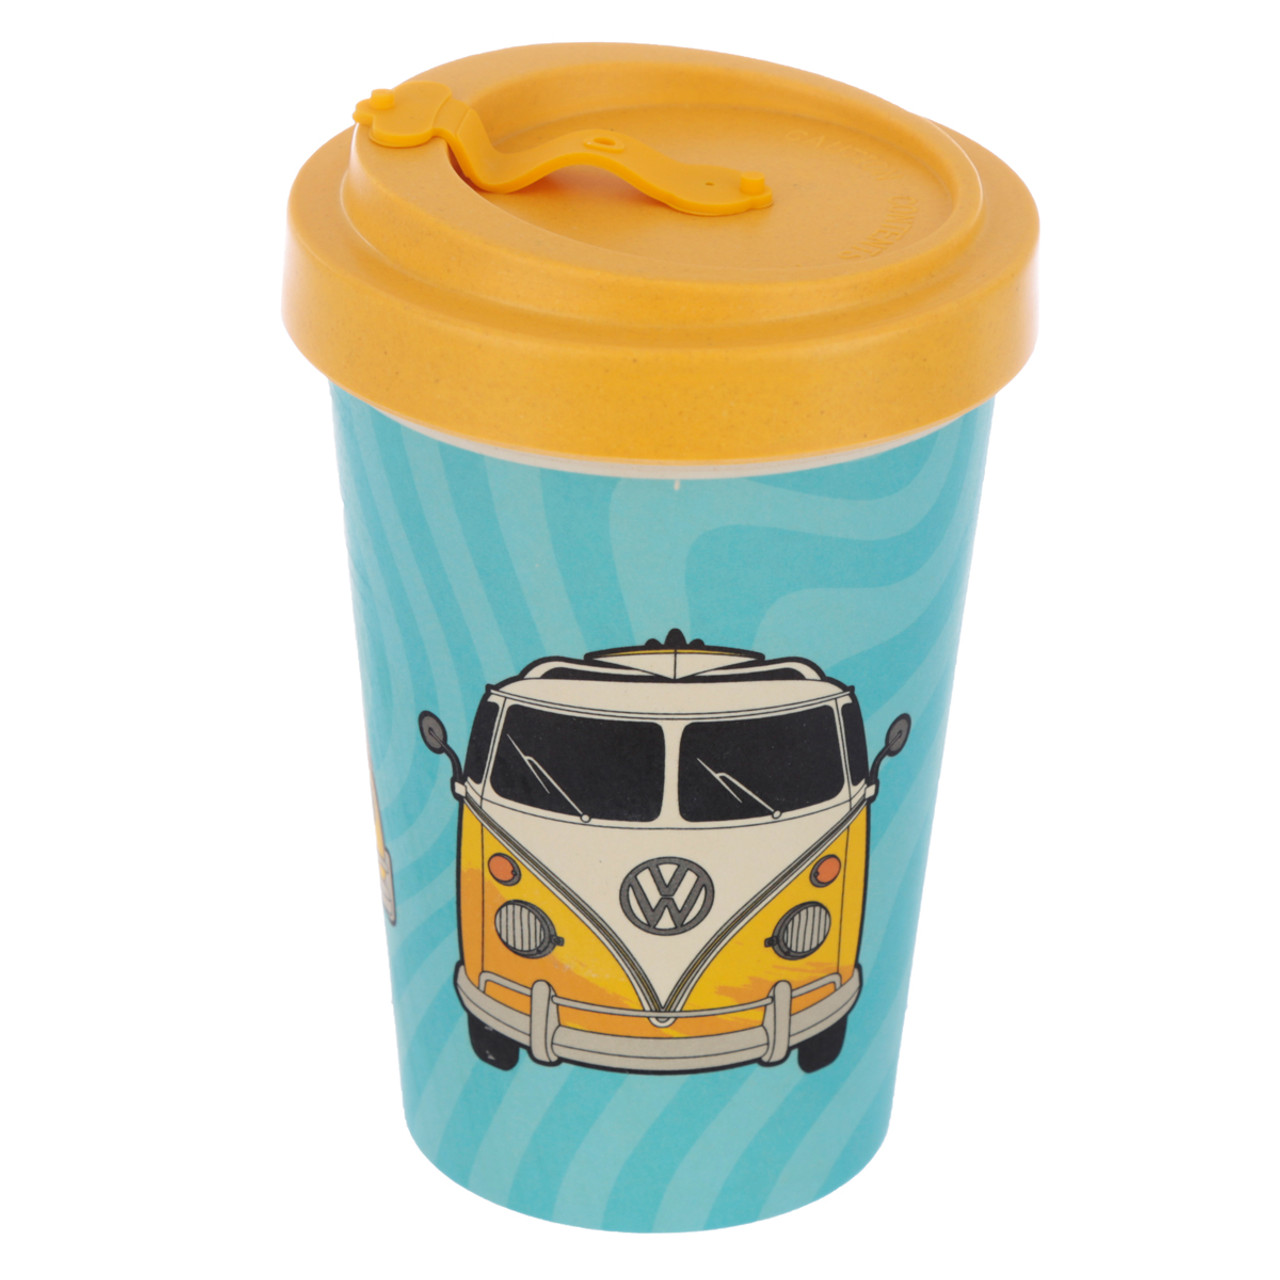 VW On The Go Travel Mug (Z042)